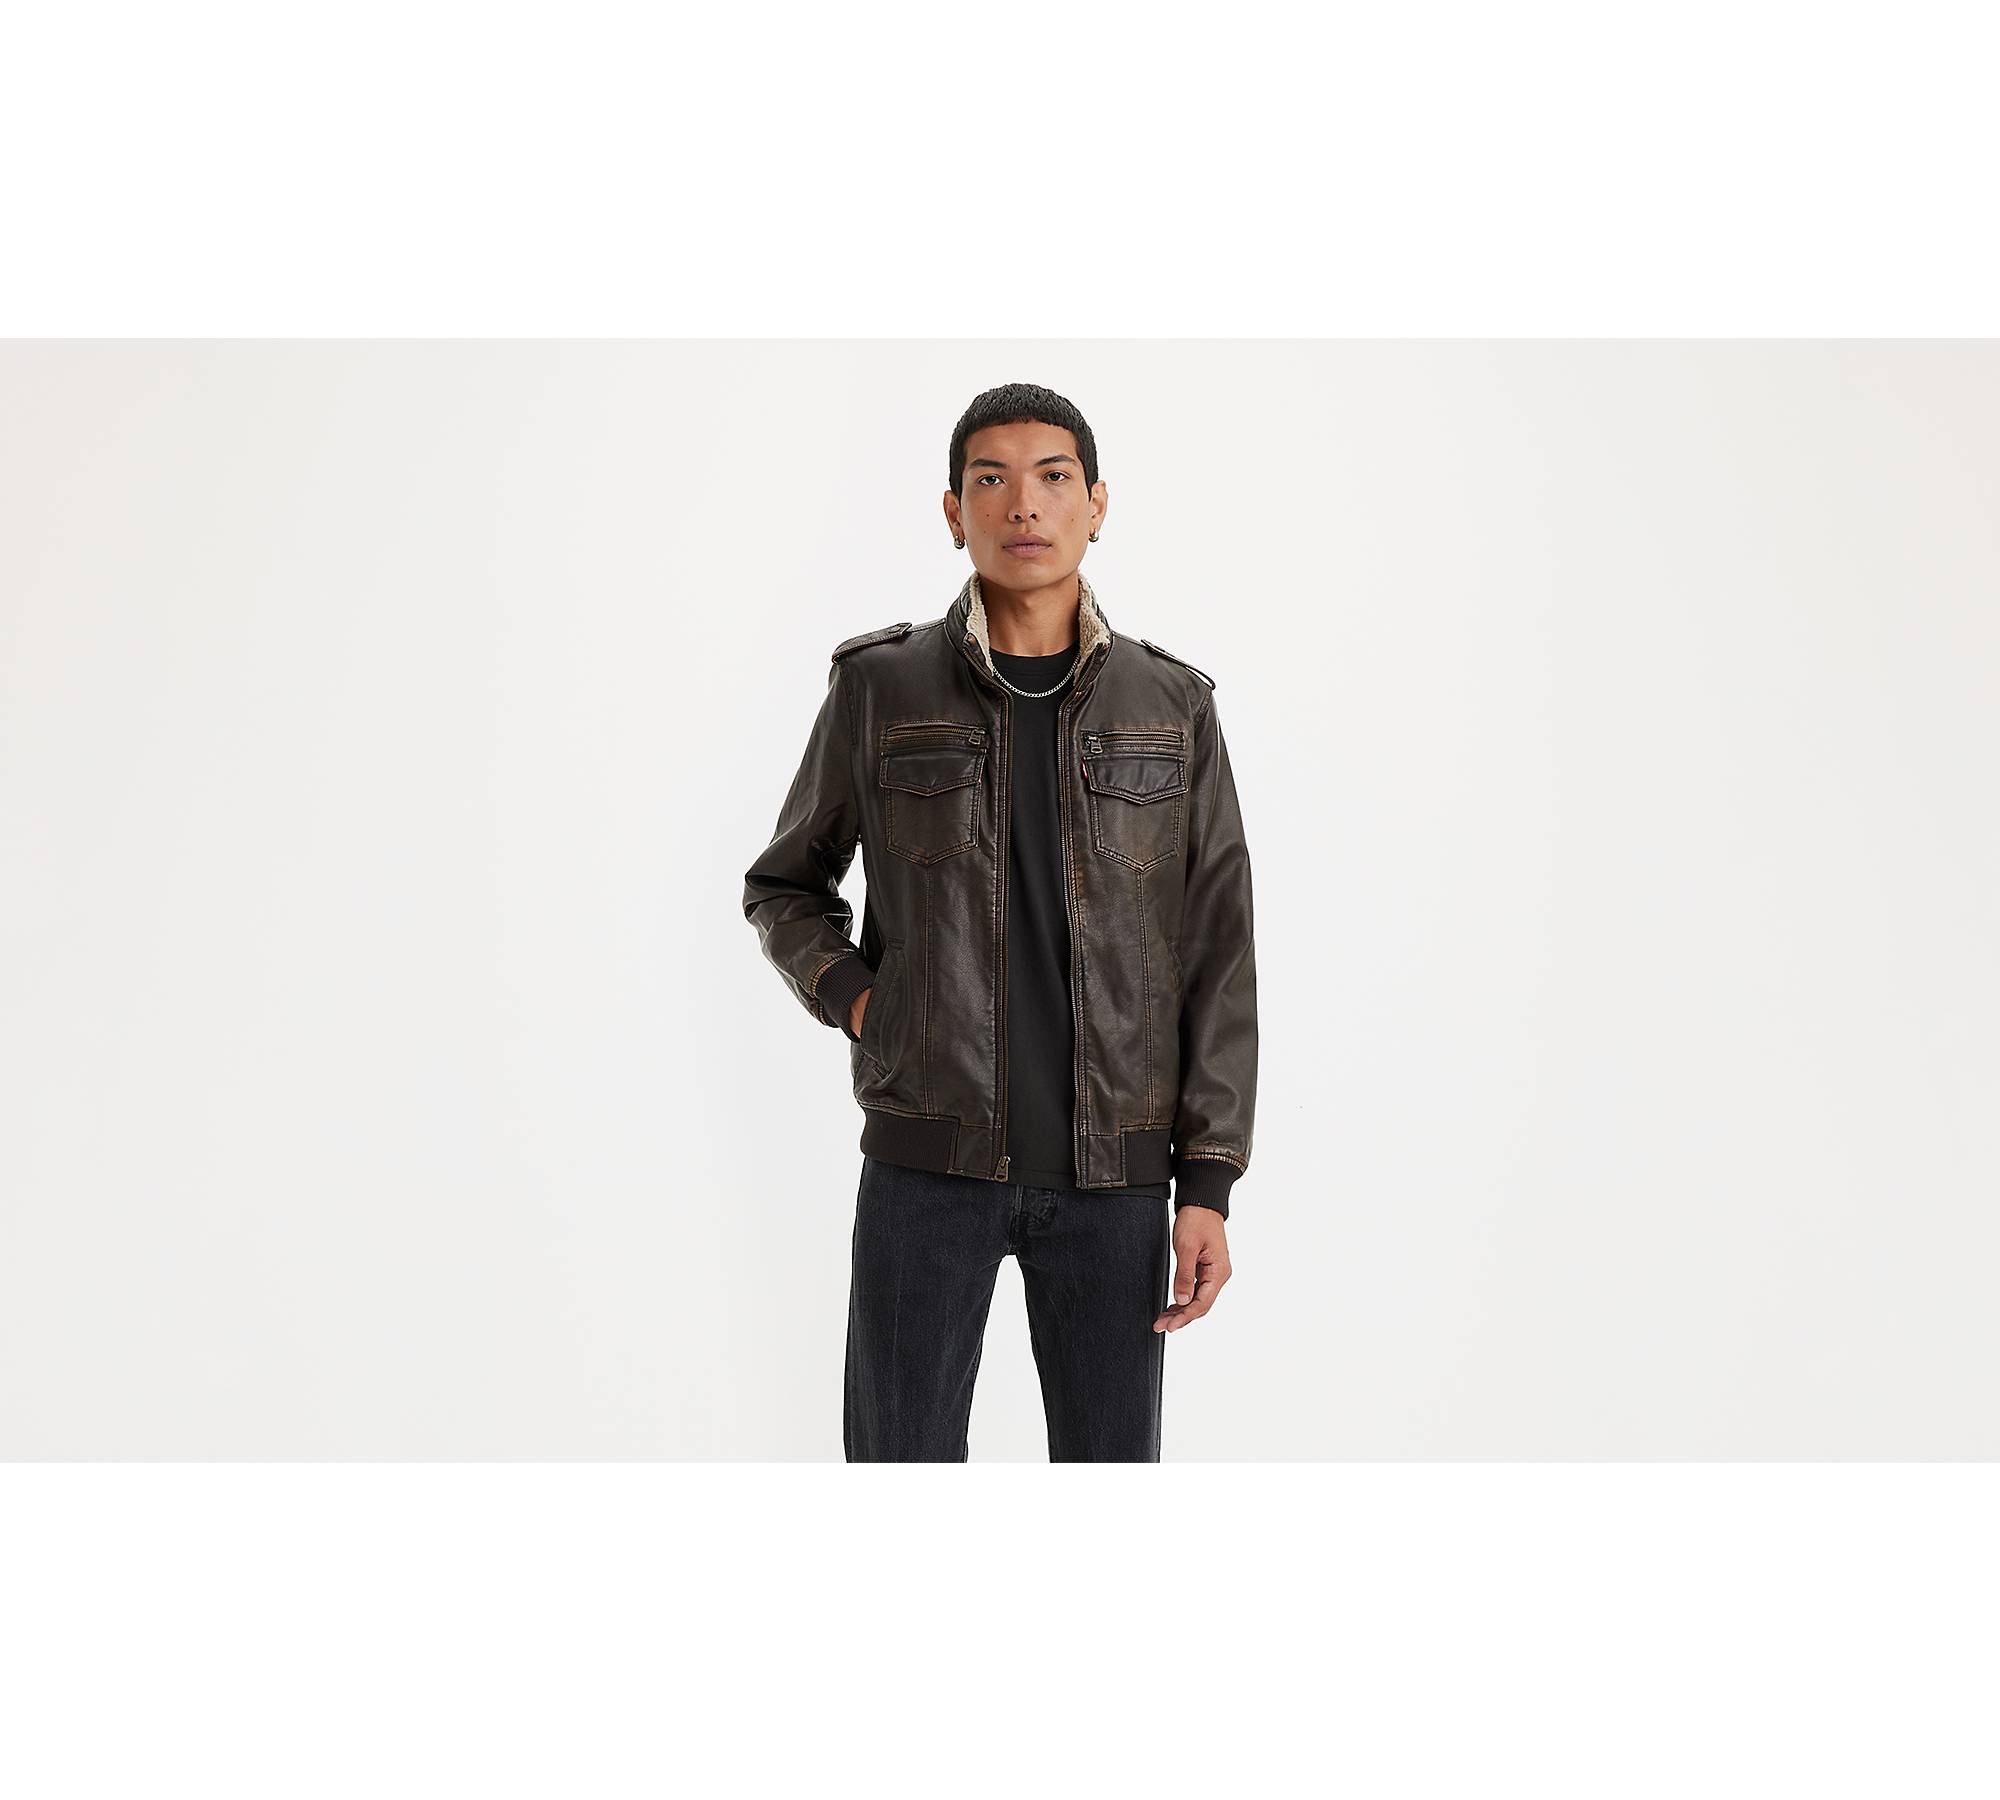 Faux Leather Sherpa Bomber Jacket - Black